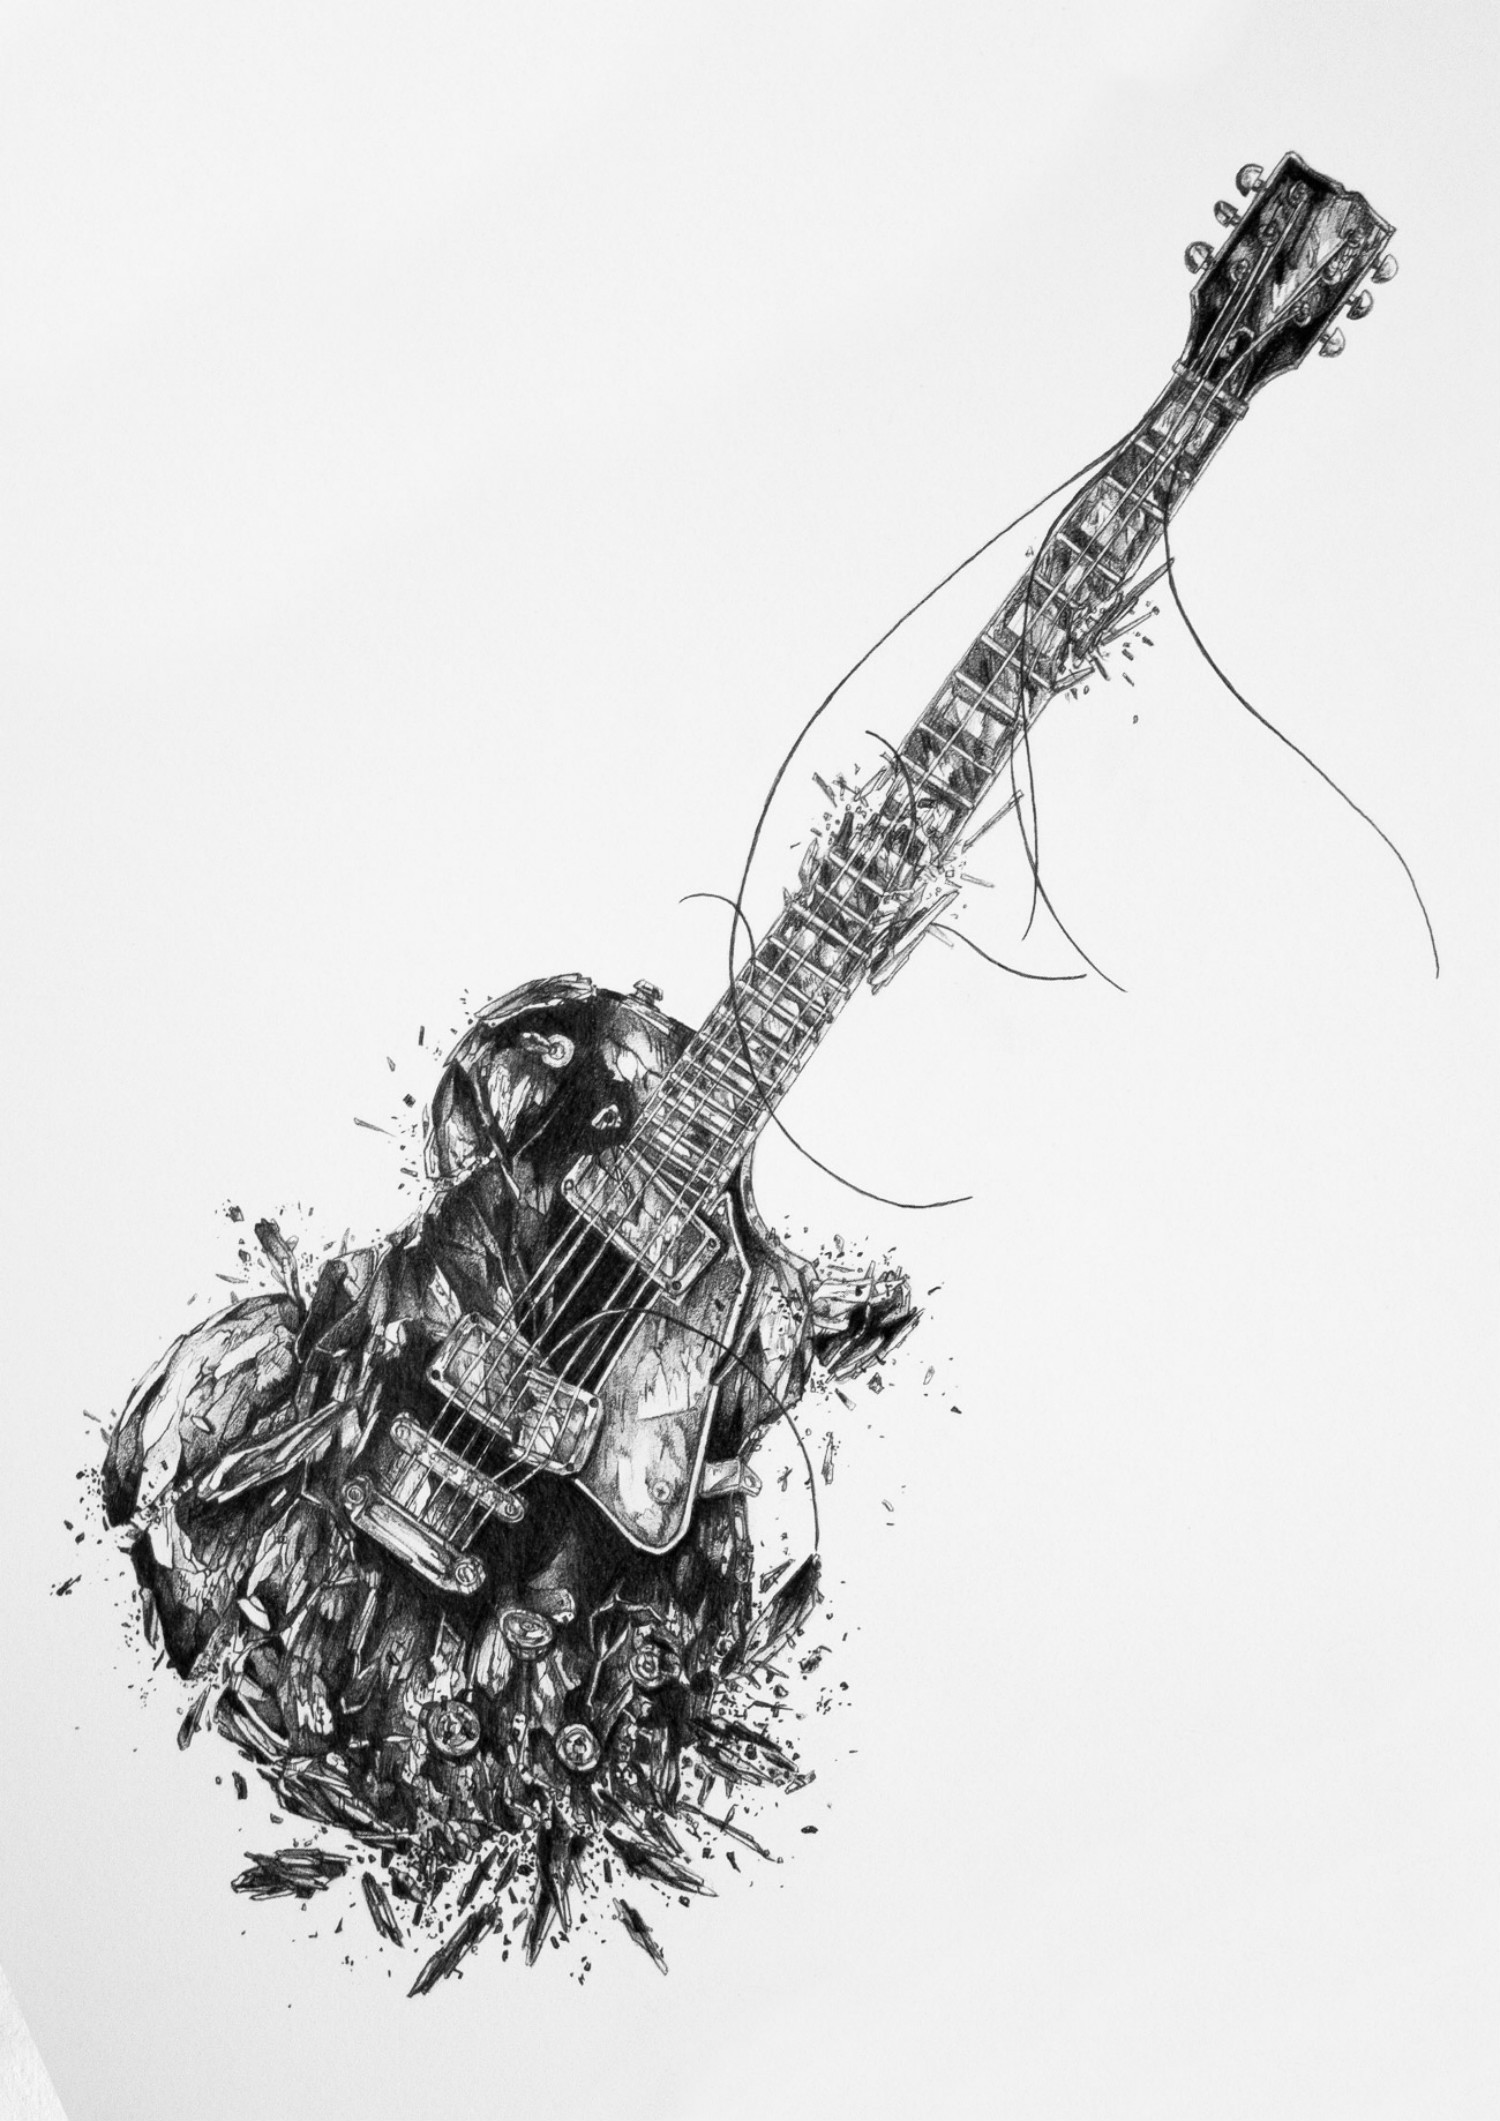 Digital Art Minimalism White Background Electric Guitar Monochrome Drawing Destroyed Portrait Displa 1500x2121